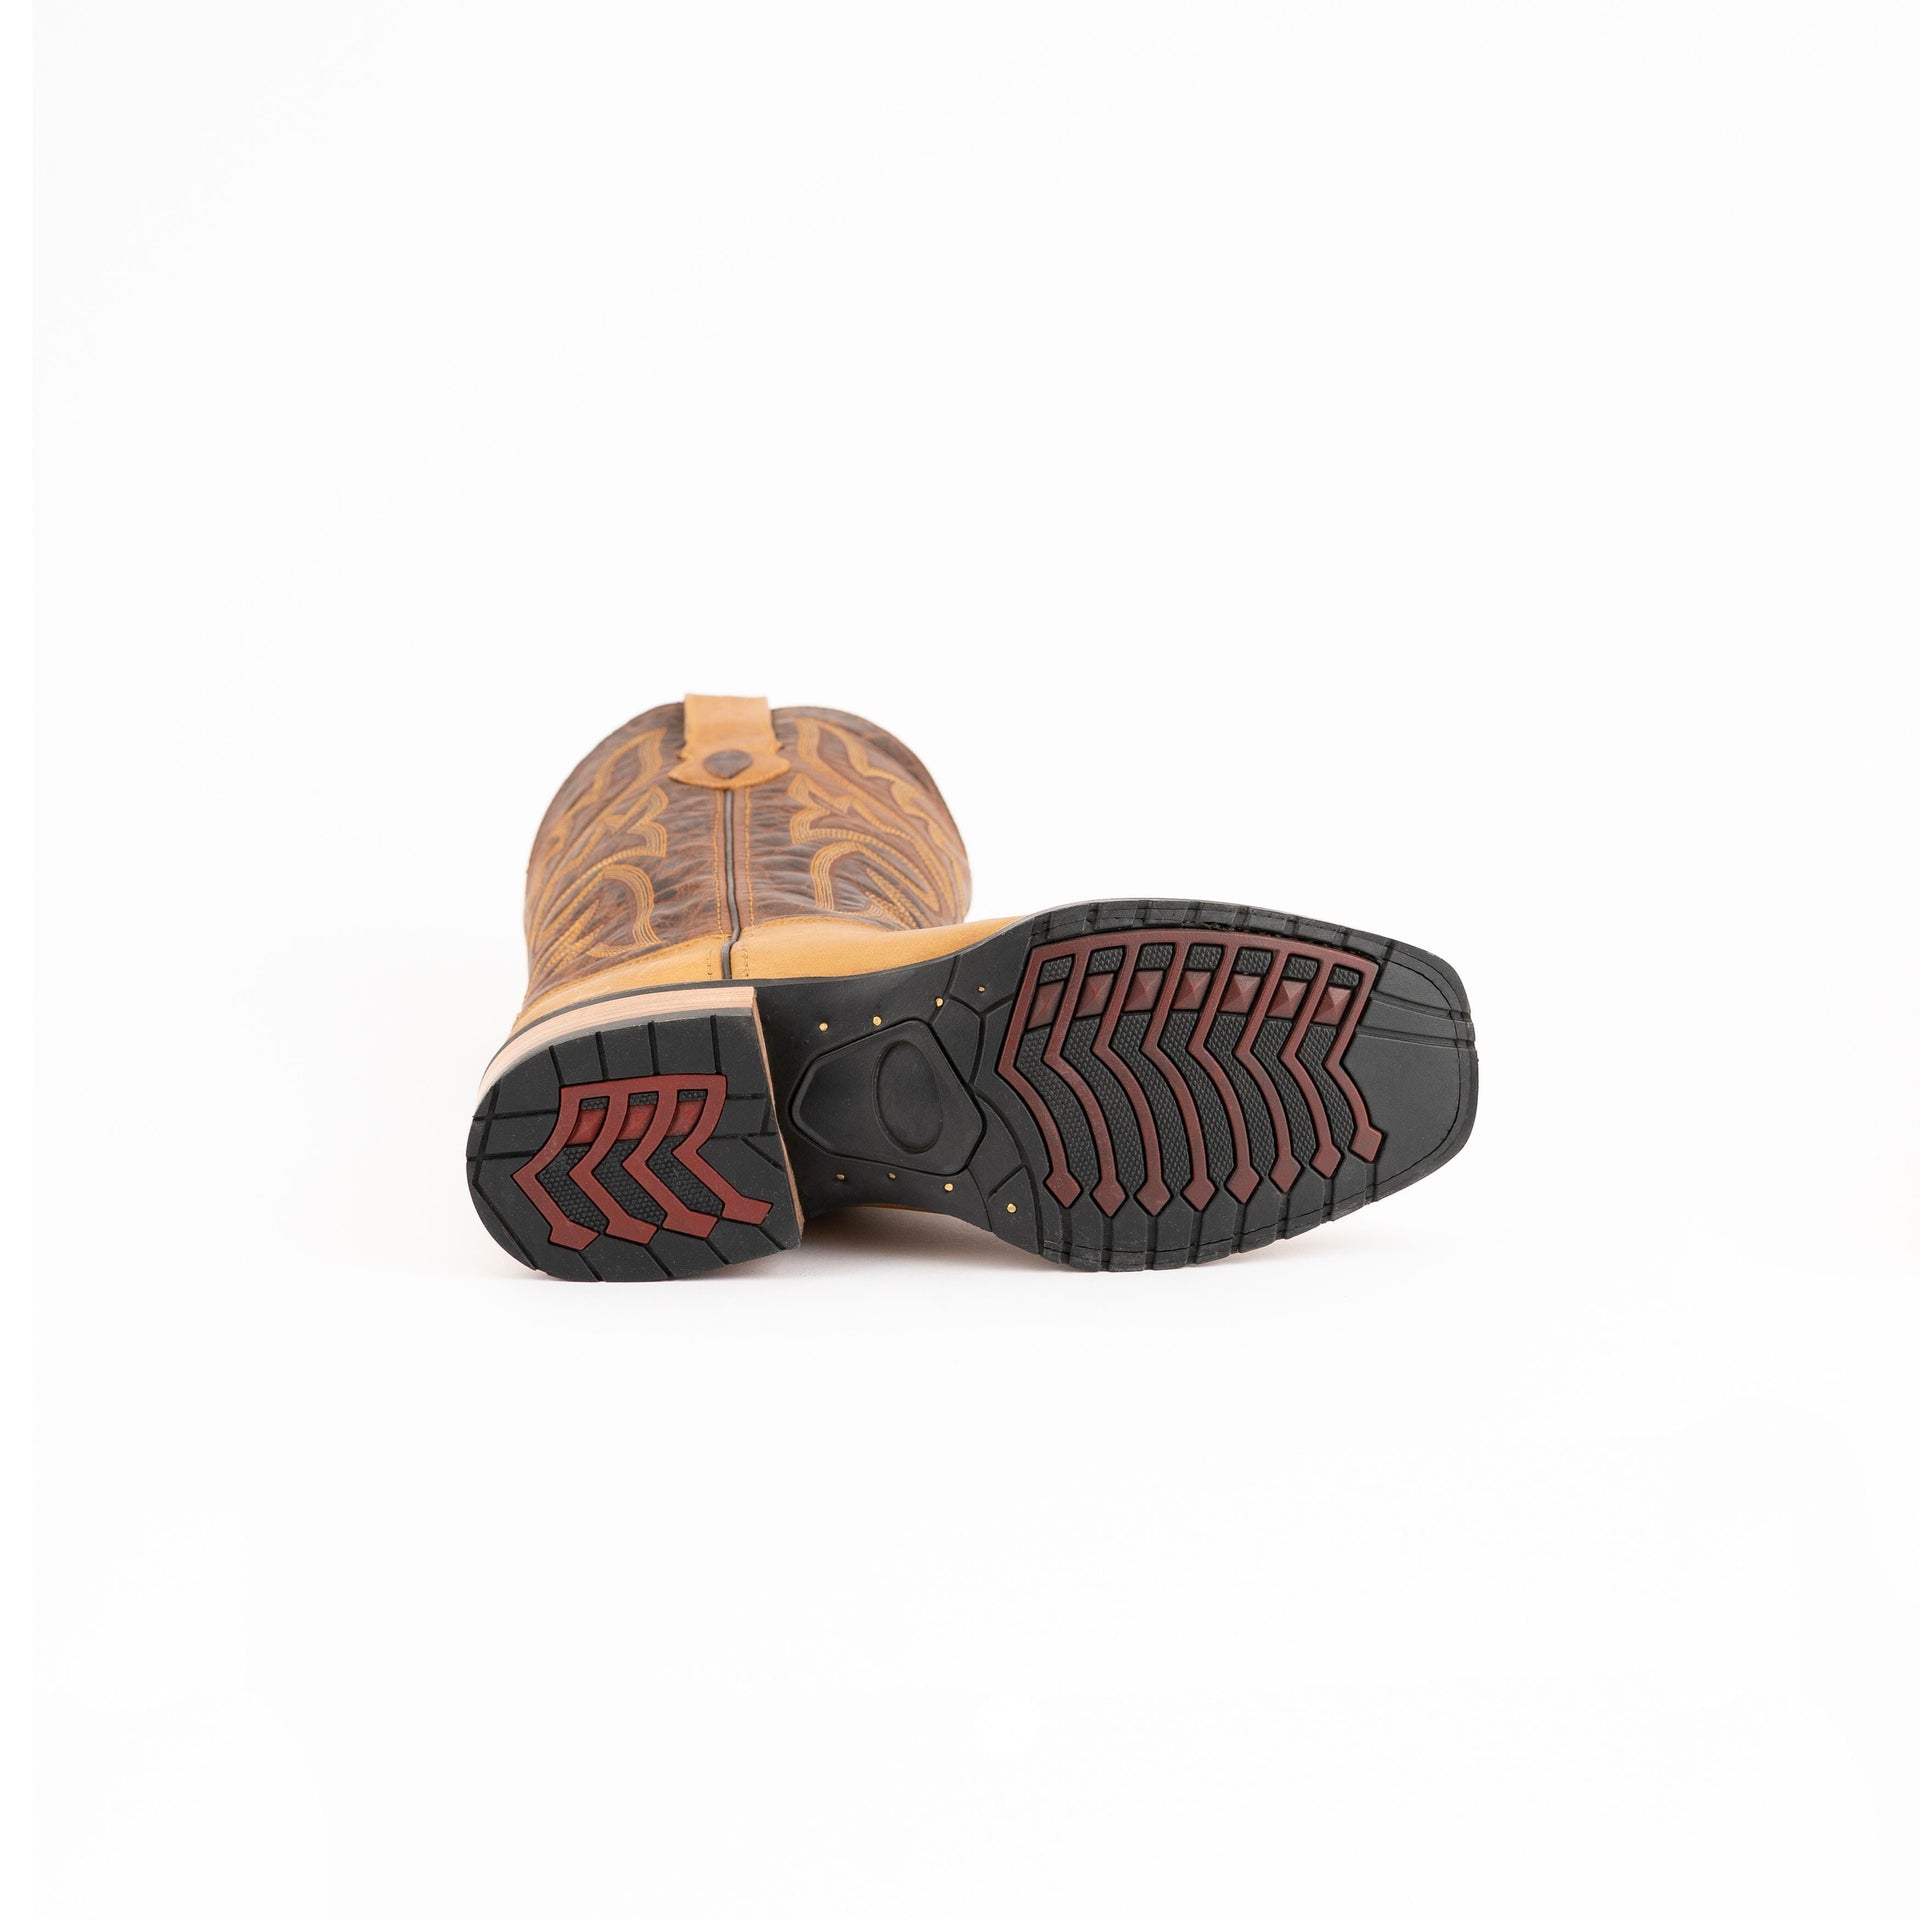 Men's Ferrini Kingston Leather Boots Handcrafted Tan - yeehawcowboy